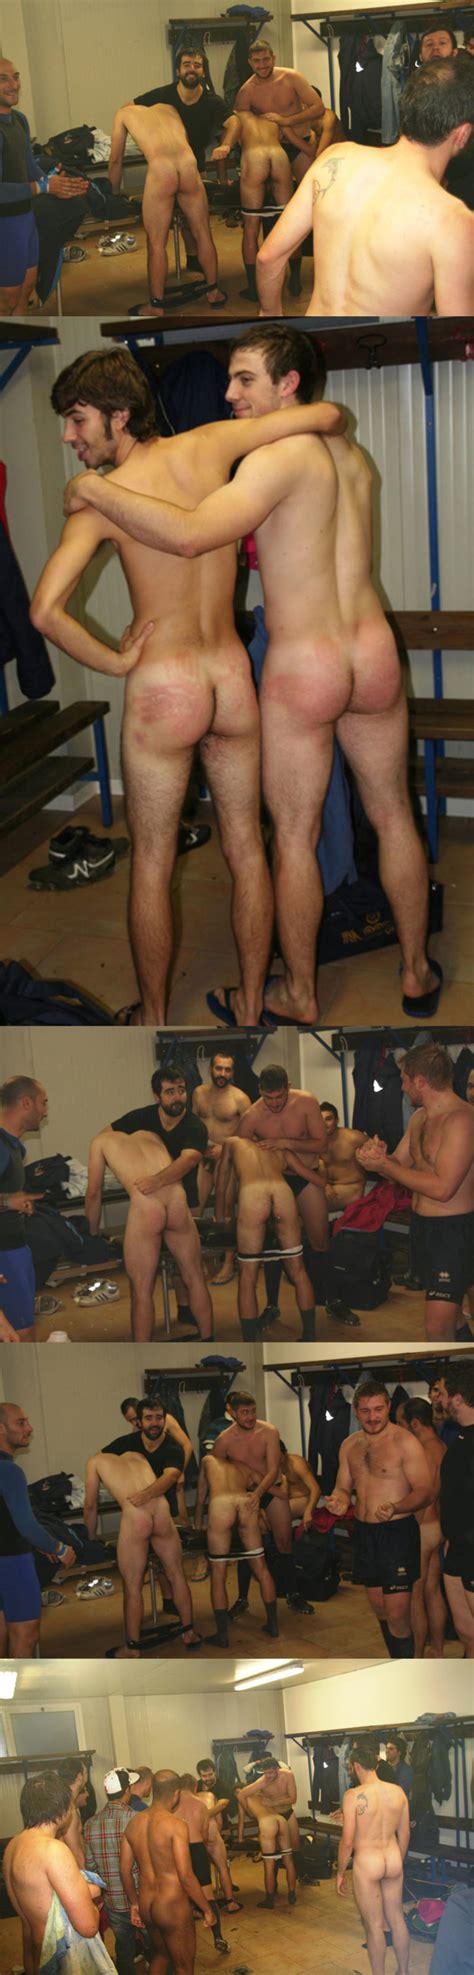 Rugby Locker Room Initiation Spycamfromguys Hidden Cams Spying On Men